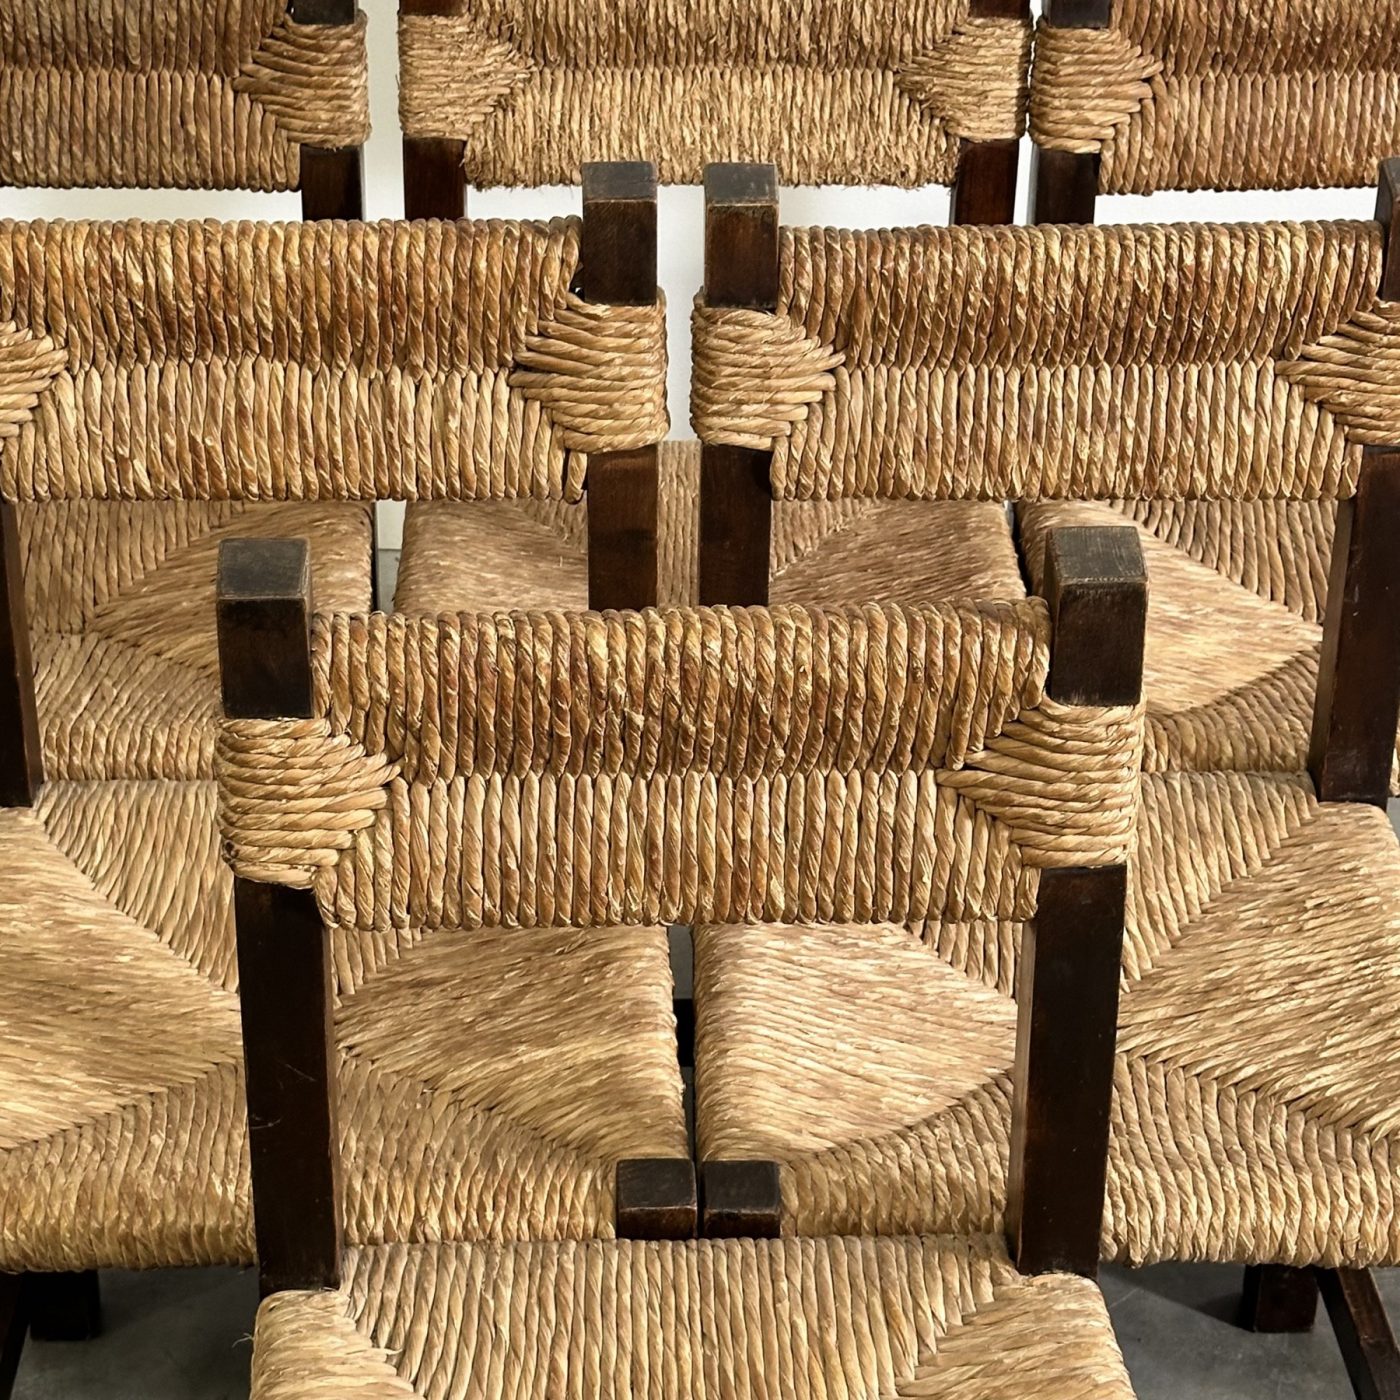 objet-vagabond-straw-chairs0002